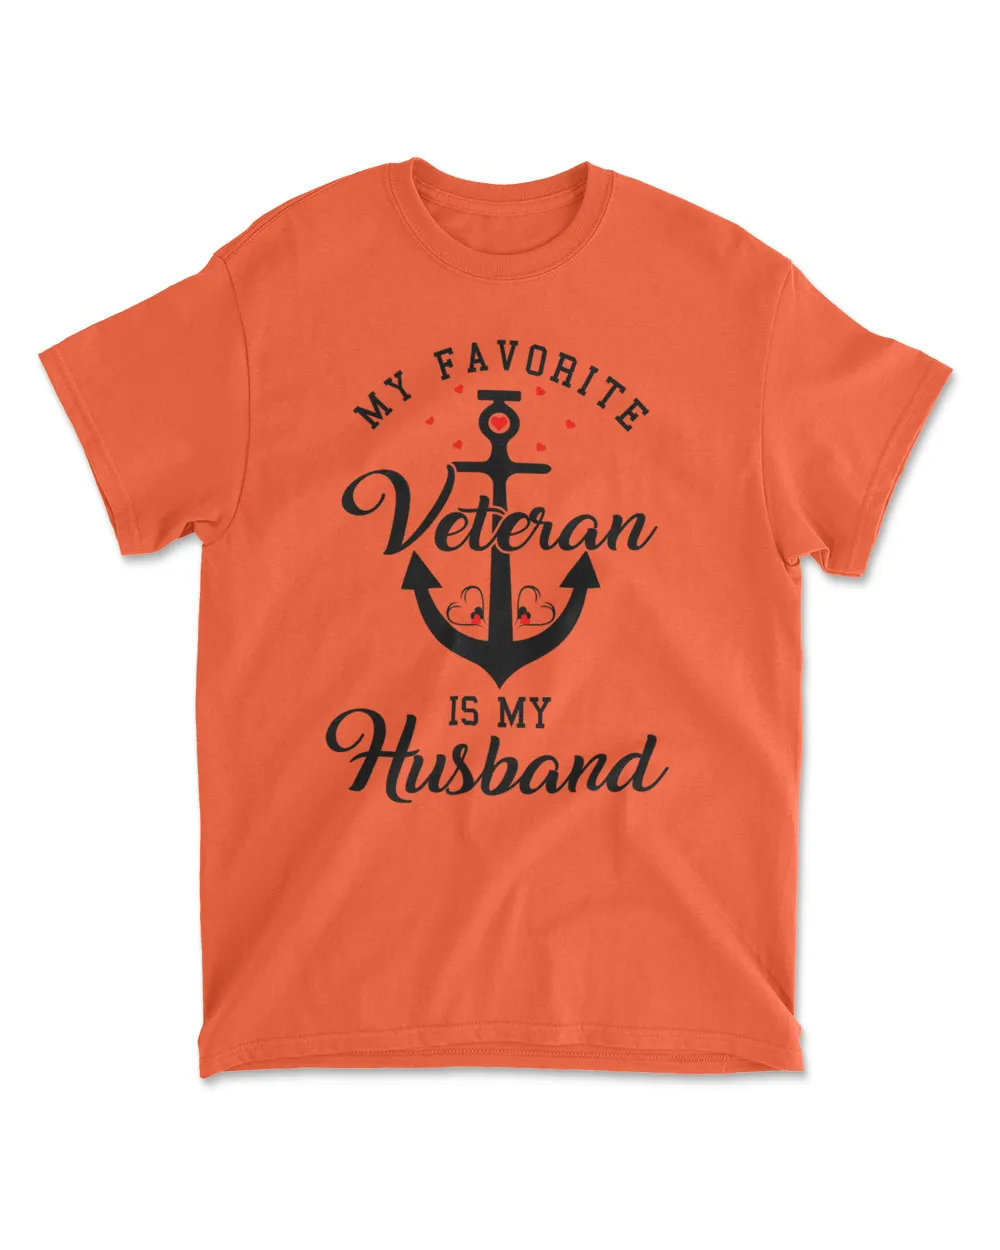 My favorite veteran is my husband t shirt